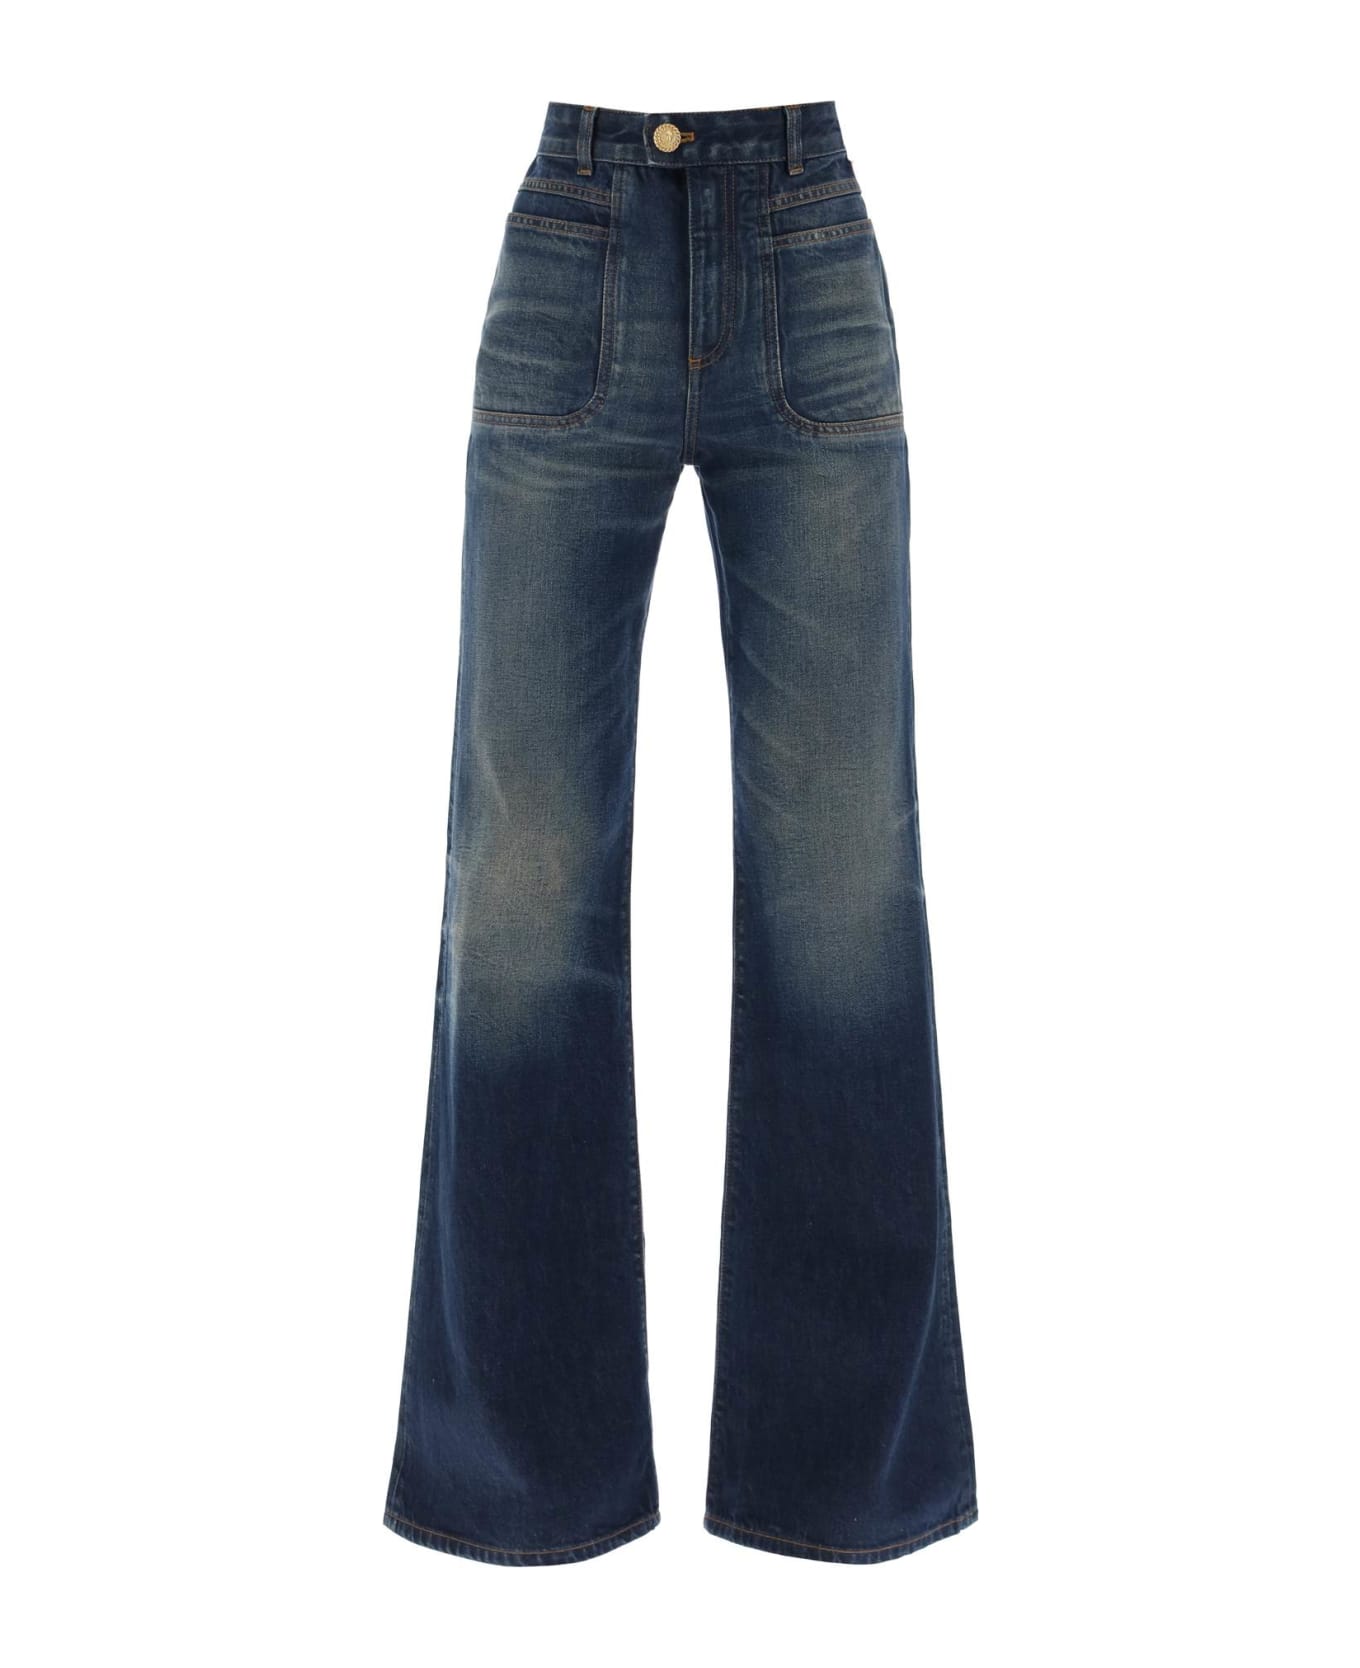 Balmain Denim Flare Jeans - Kd Bleu Jean Brut